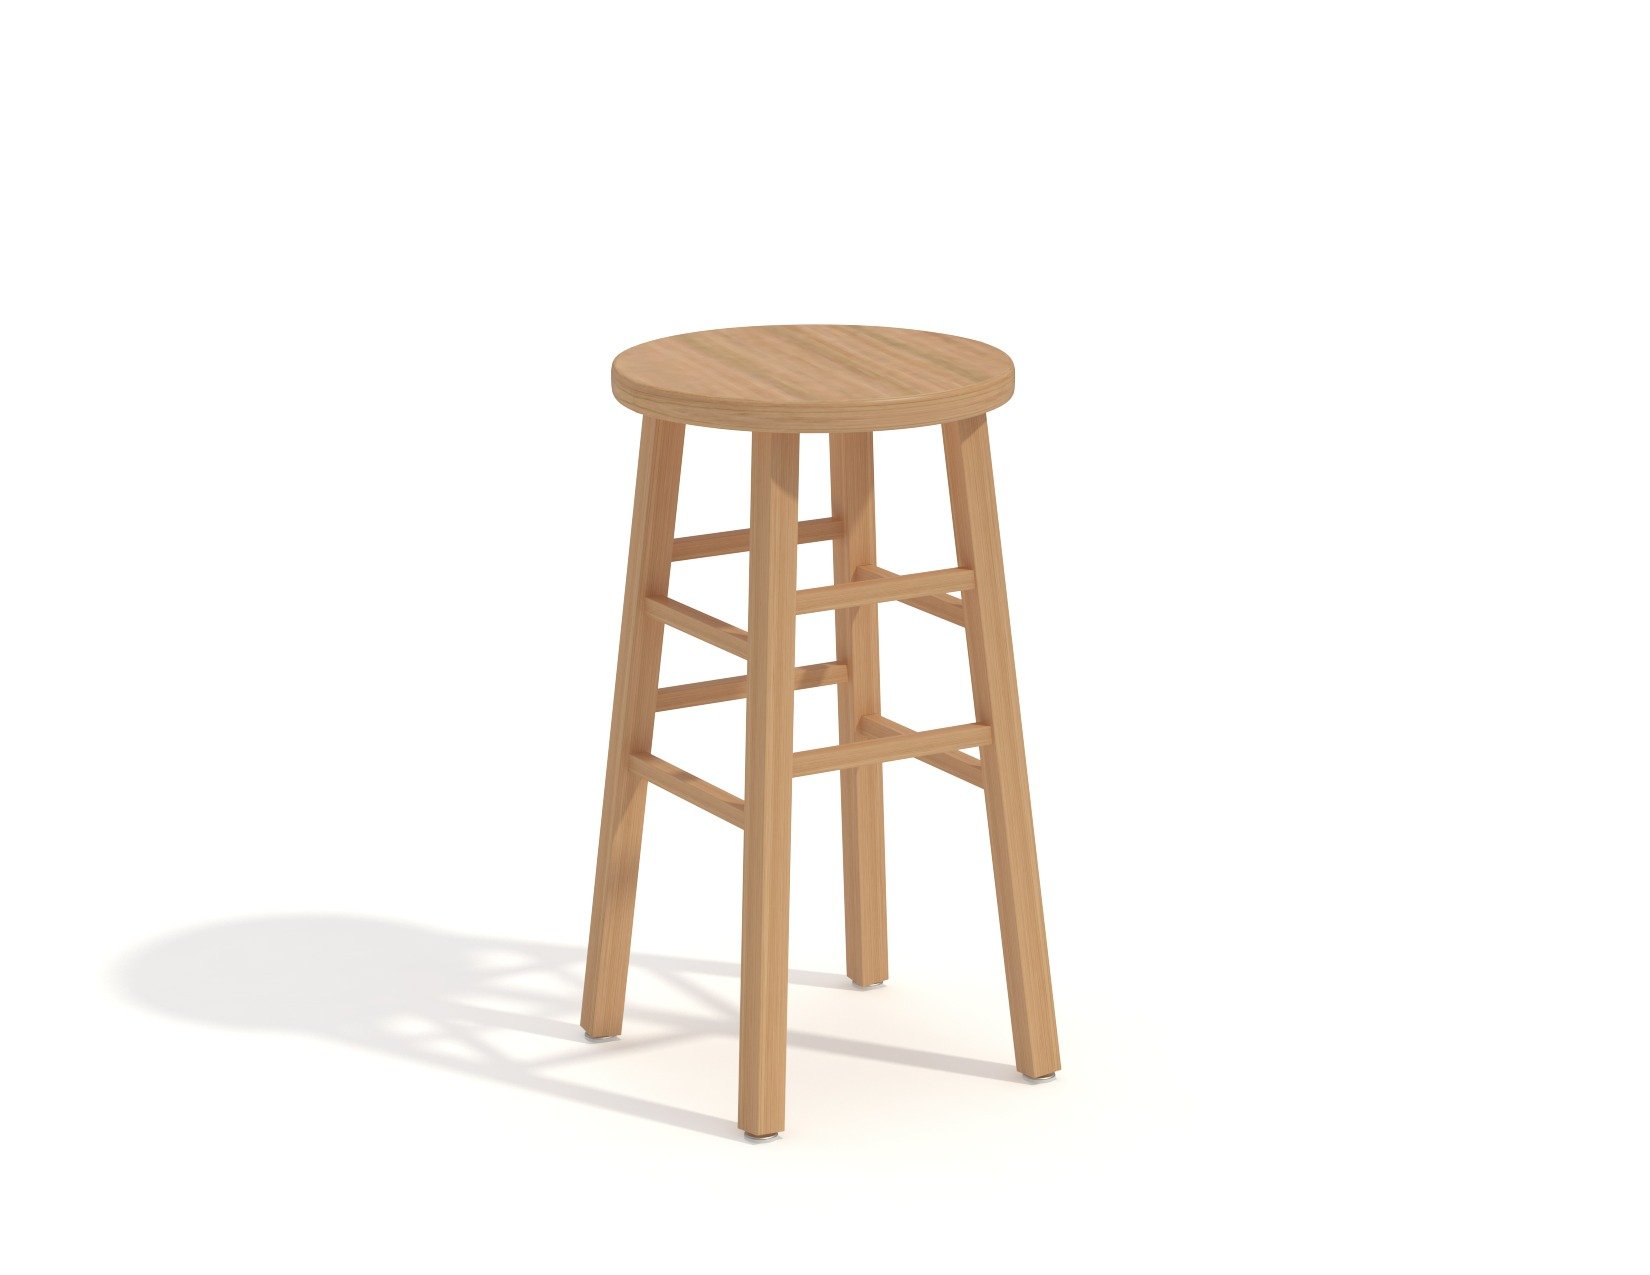 L-151-24-wood-stool.jpg